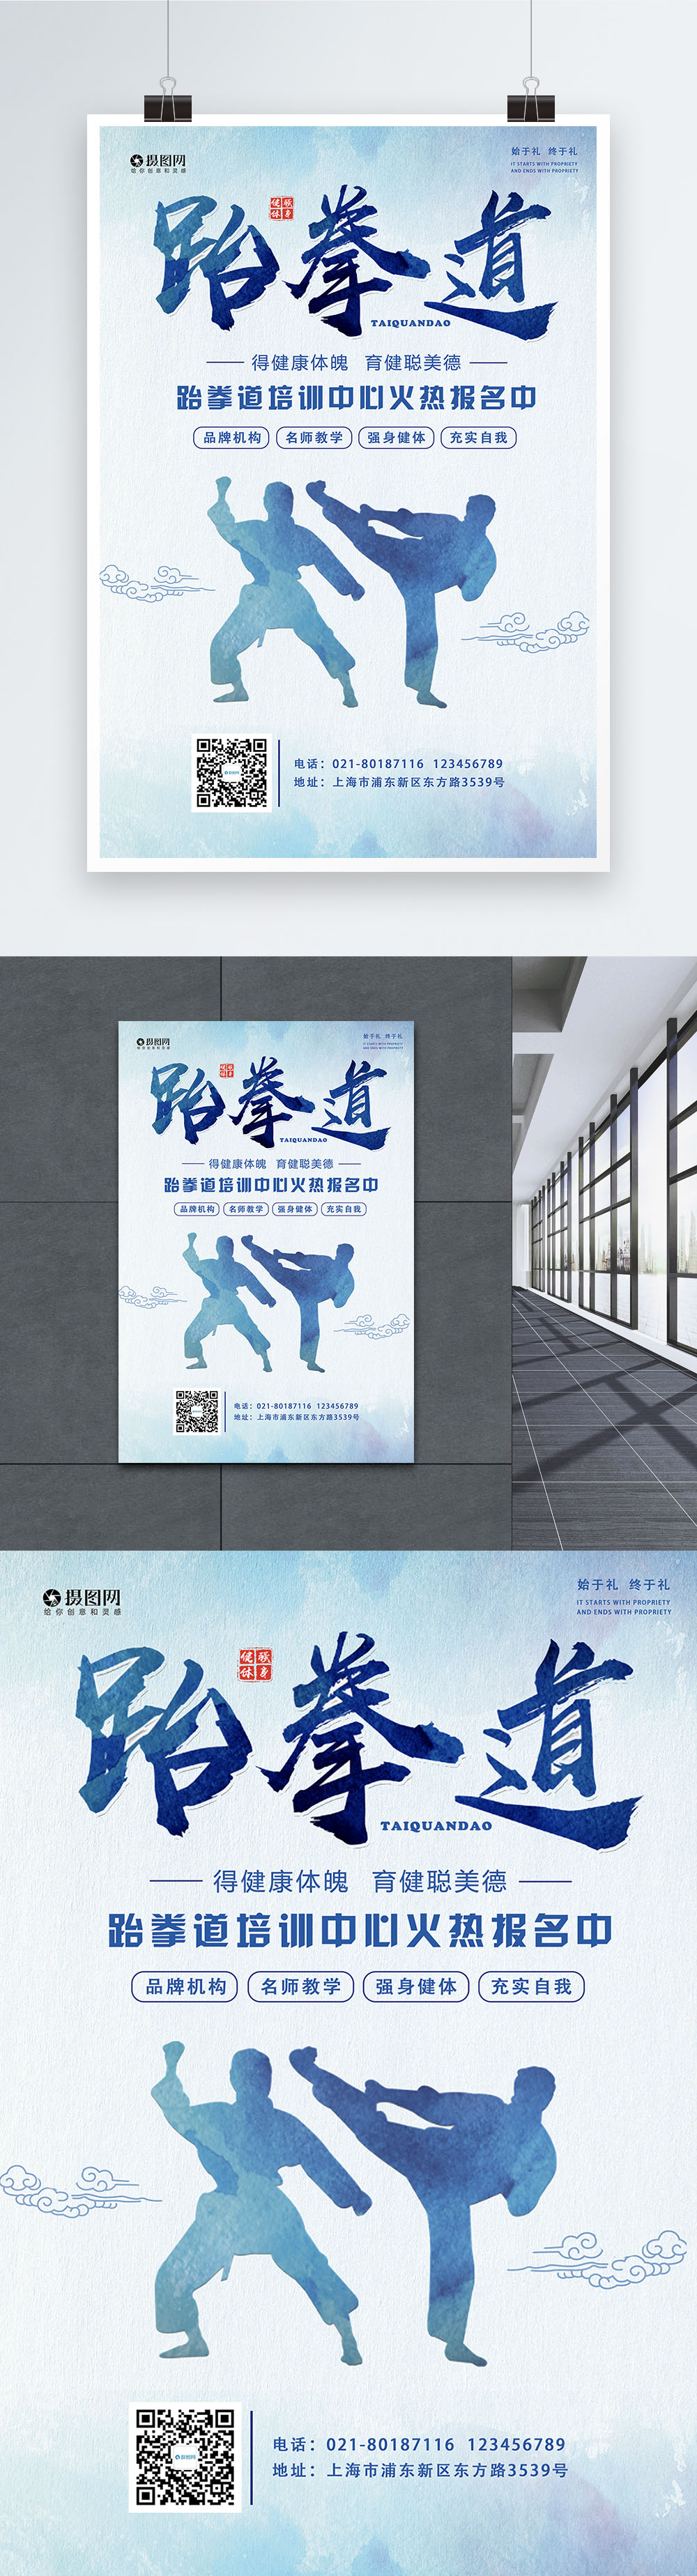 Taekwondo poster template image_picture free download 400450429_lovepik.com